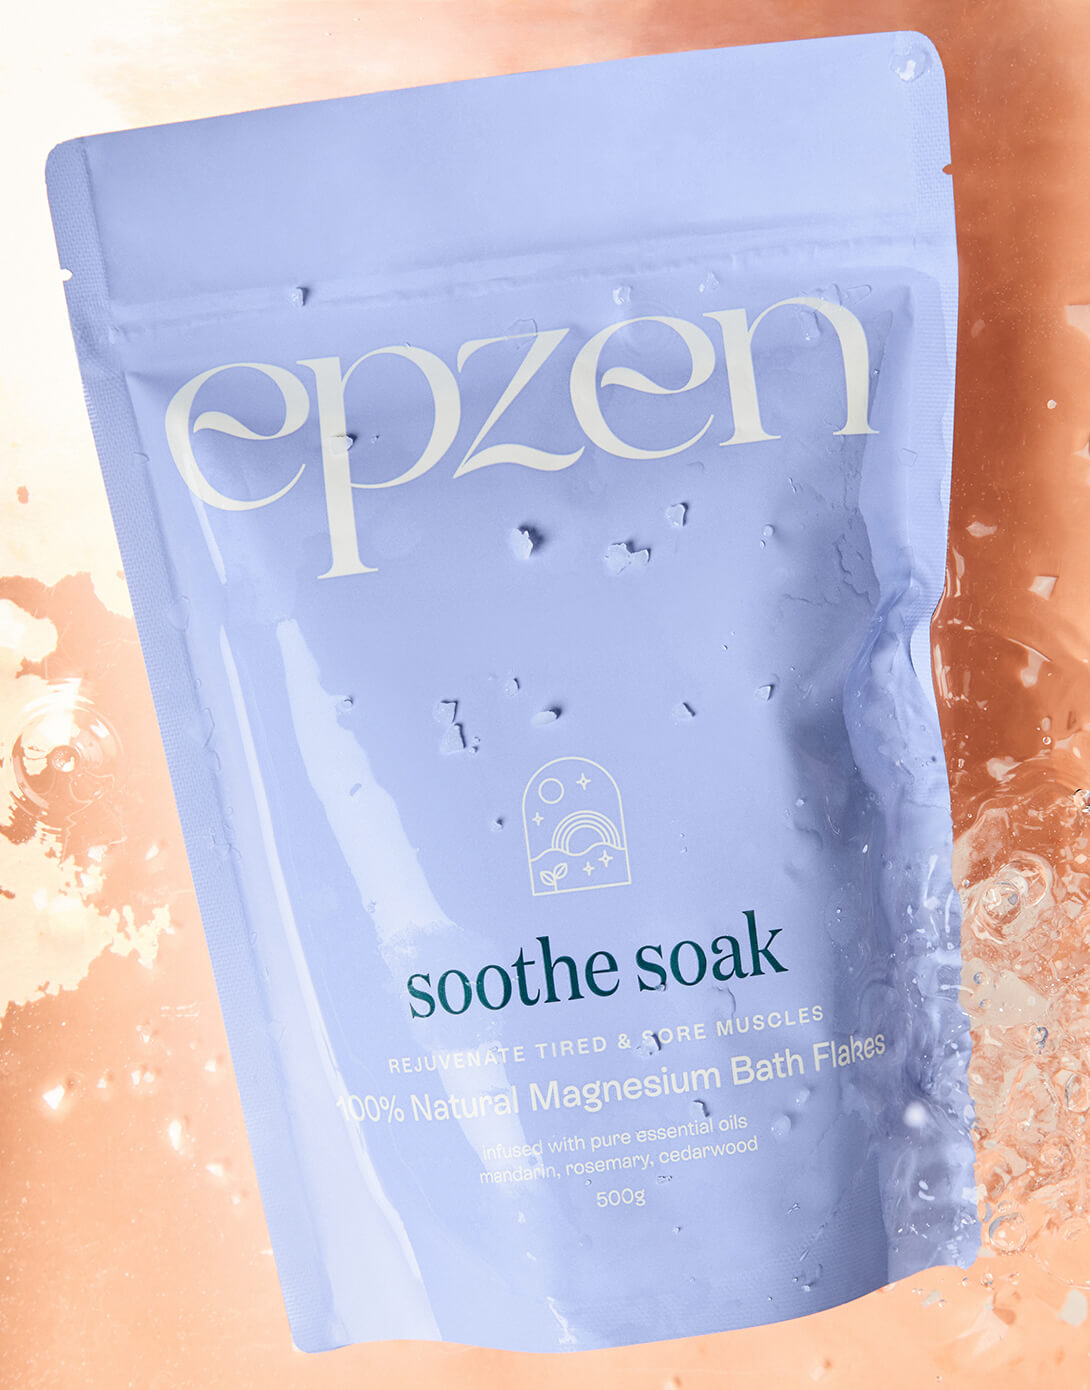 EpZen 100% Natural Magnesium Bath Flakes 500g, Soothe Soak